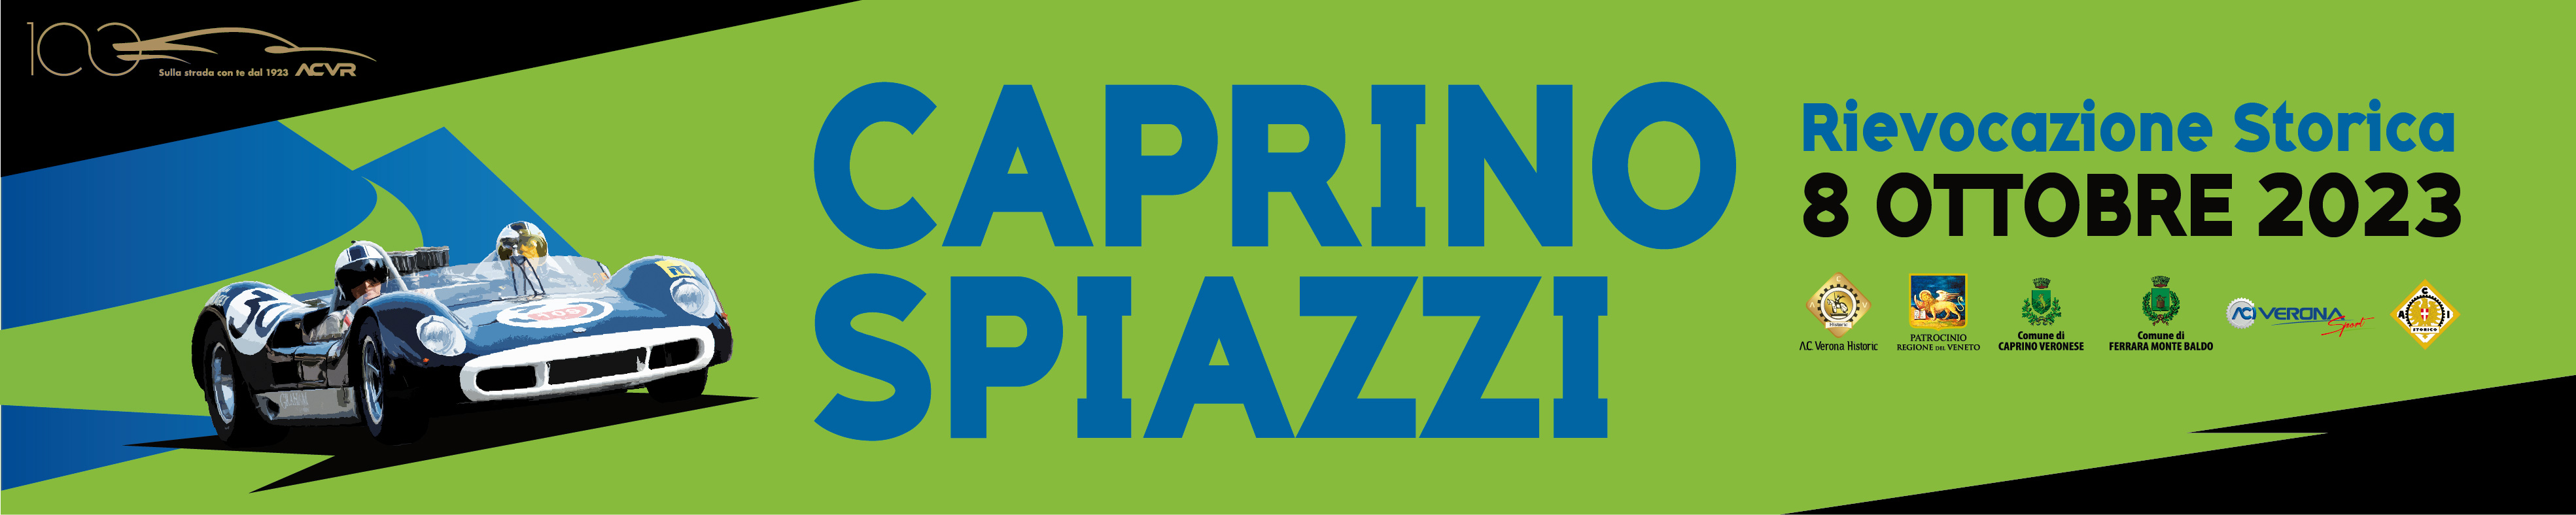 Header Caprino Spiazzi 2023